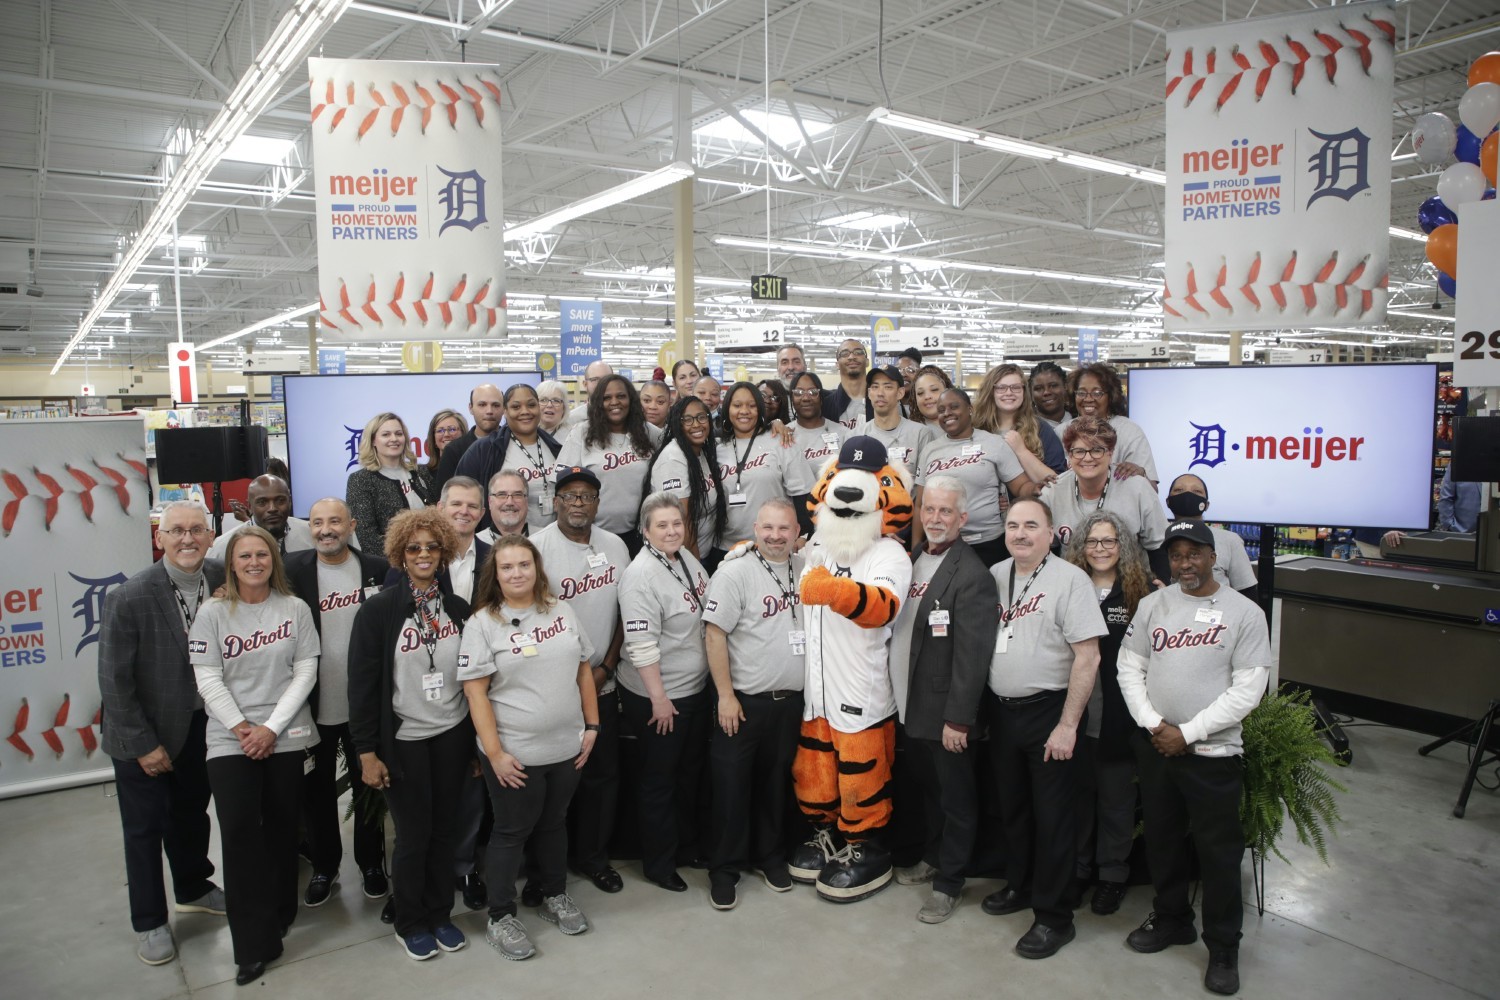 Team members at a Meijer store in Detroit celebrate Meijer’s historic partnership as the Detroit Tigers jersey sponsor.